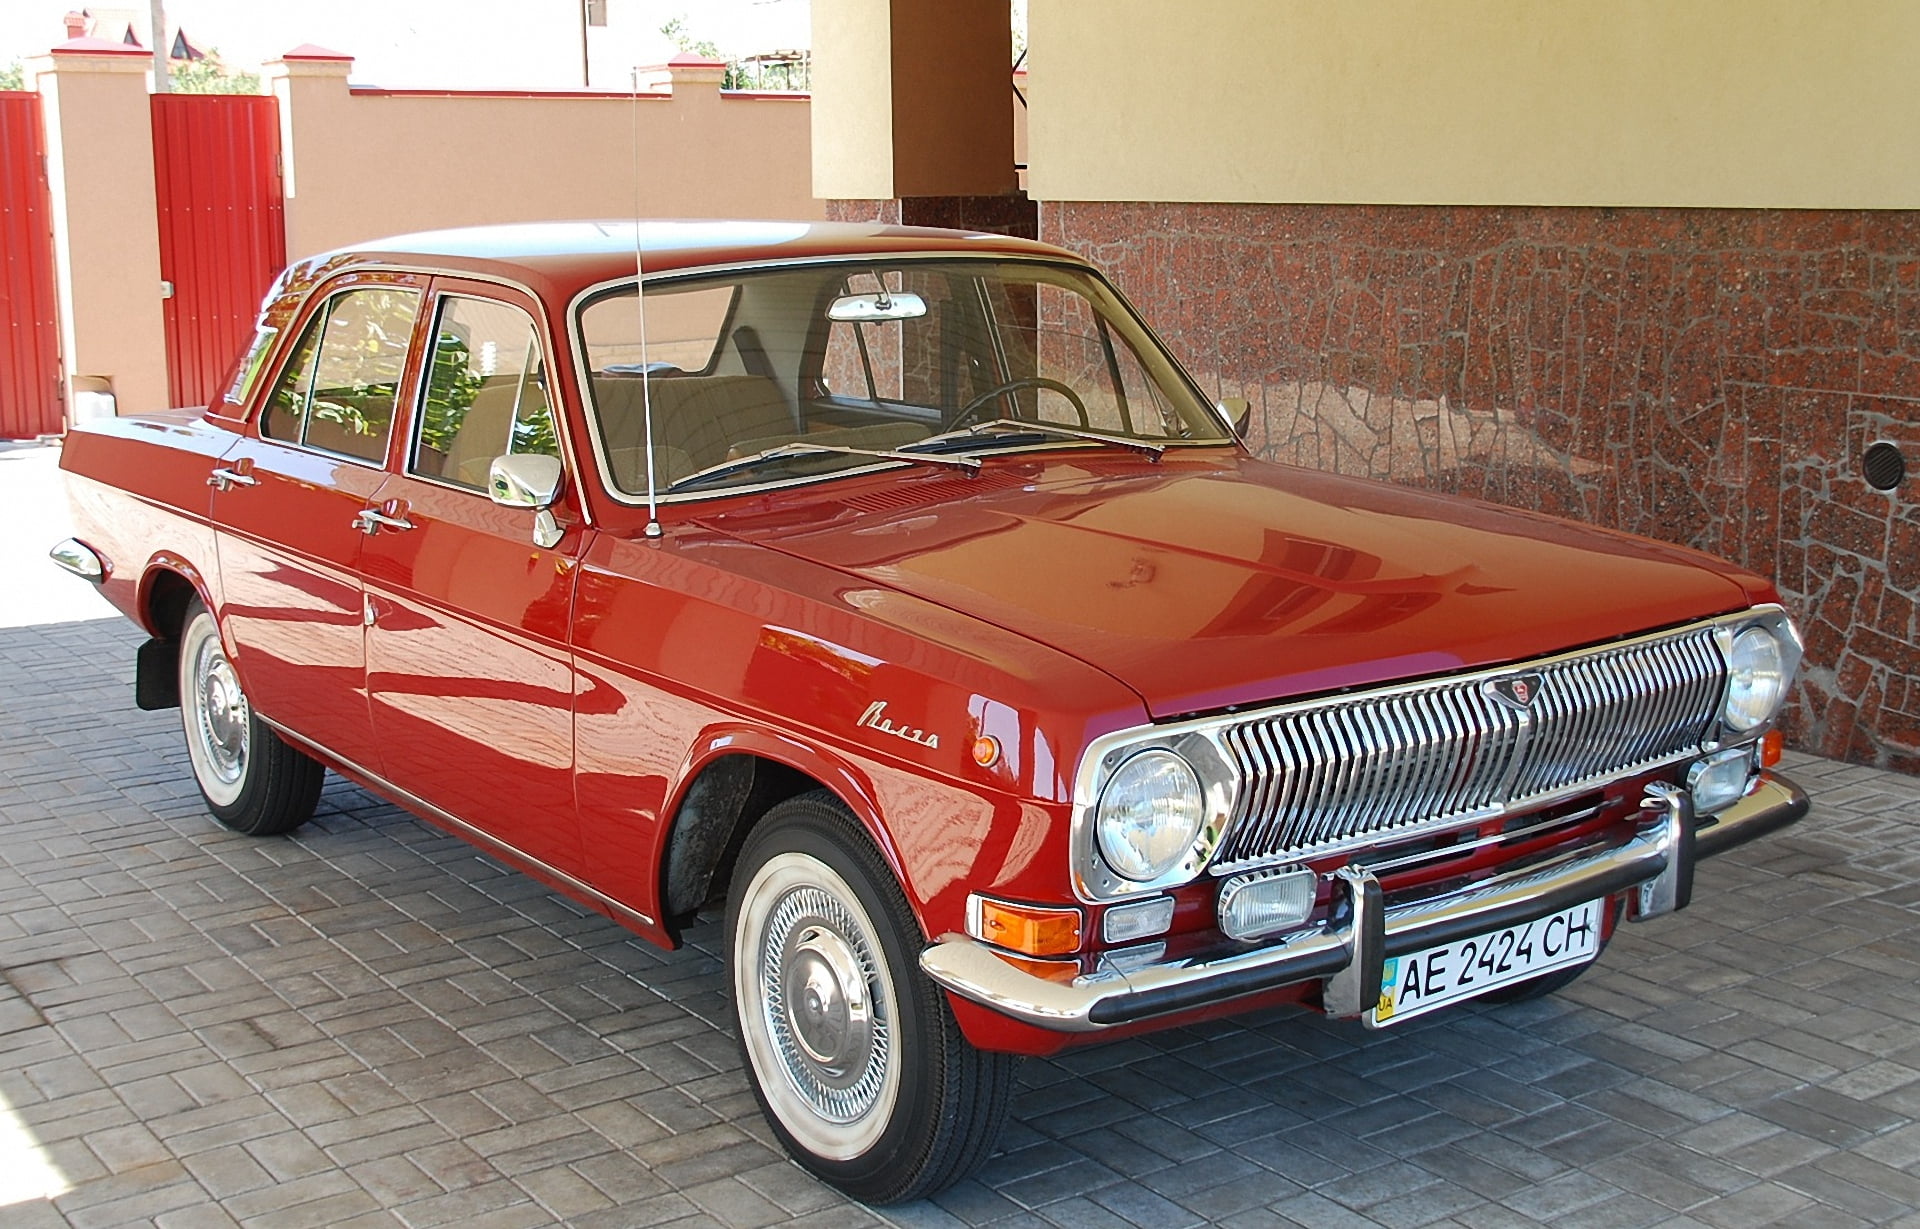 red sedan, Volga, avto, CCCP, car, old-fashioned, retro Styled